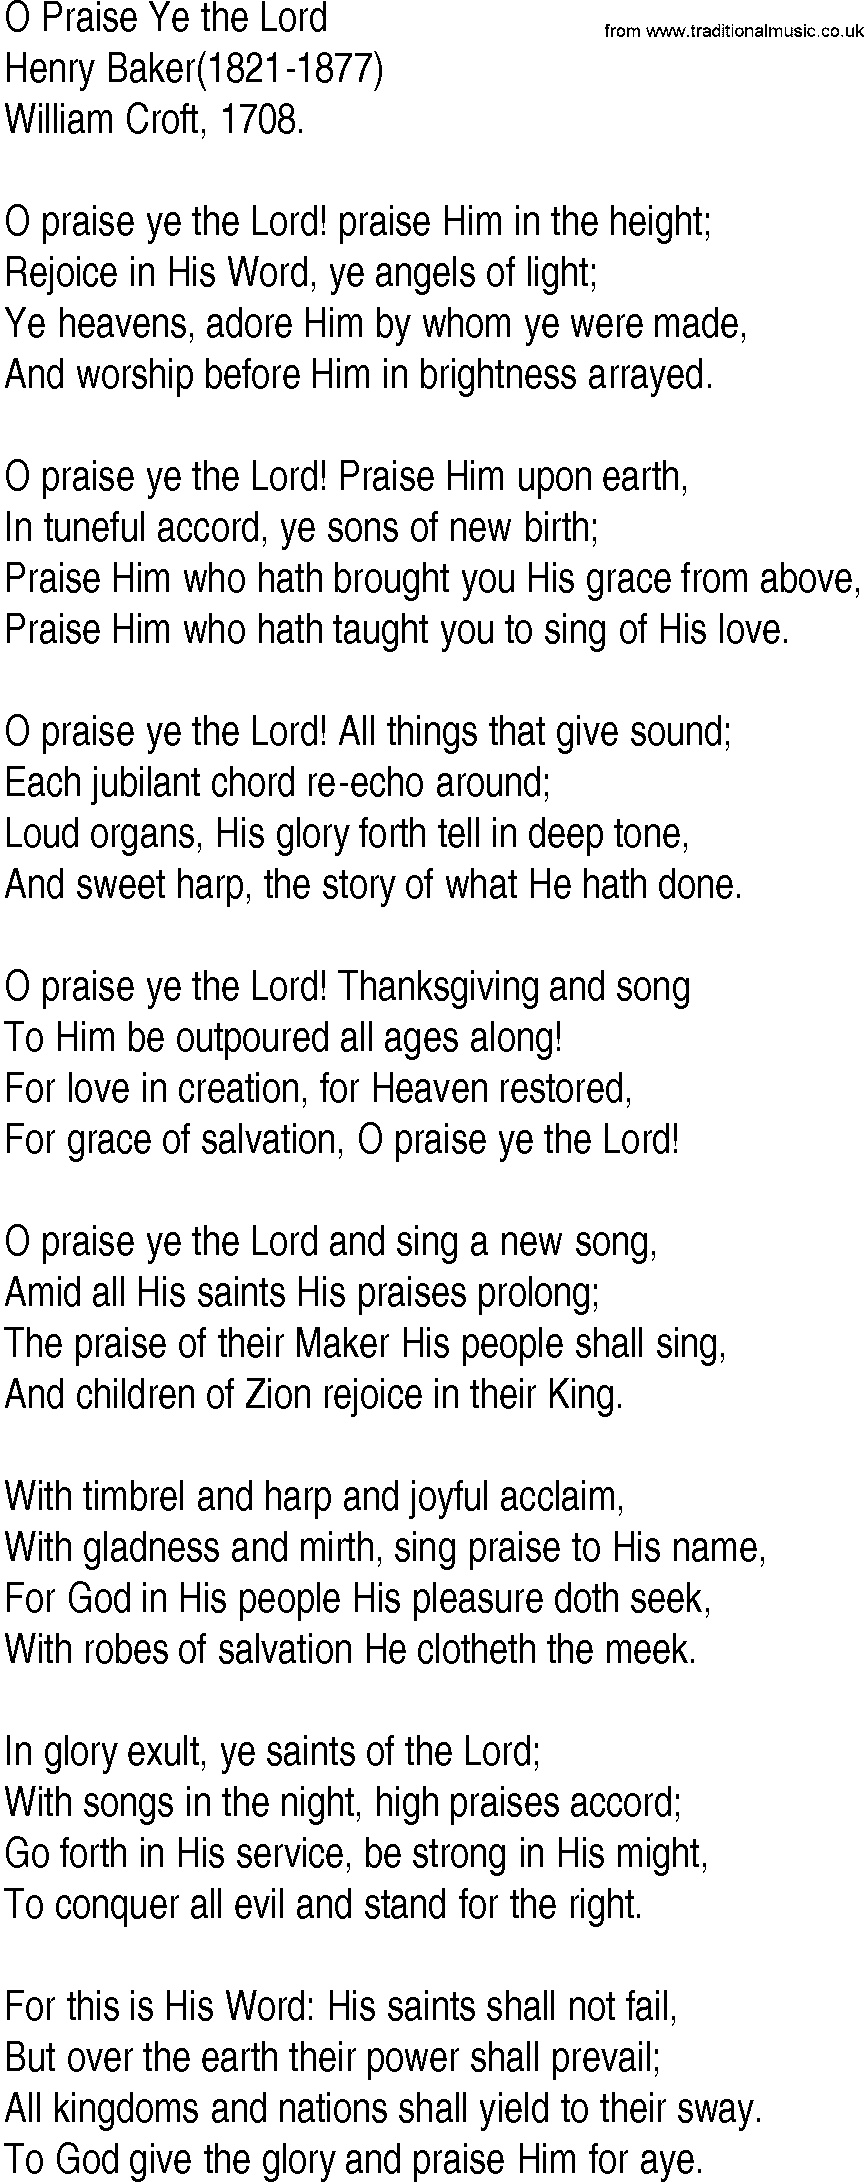 Hymn and Gospel Song: O Praise Ye the Lord by Henry Baker lyrics